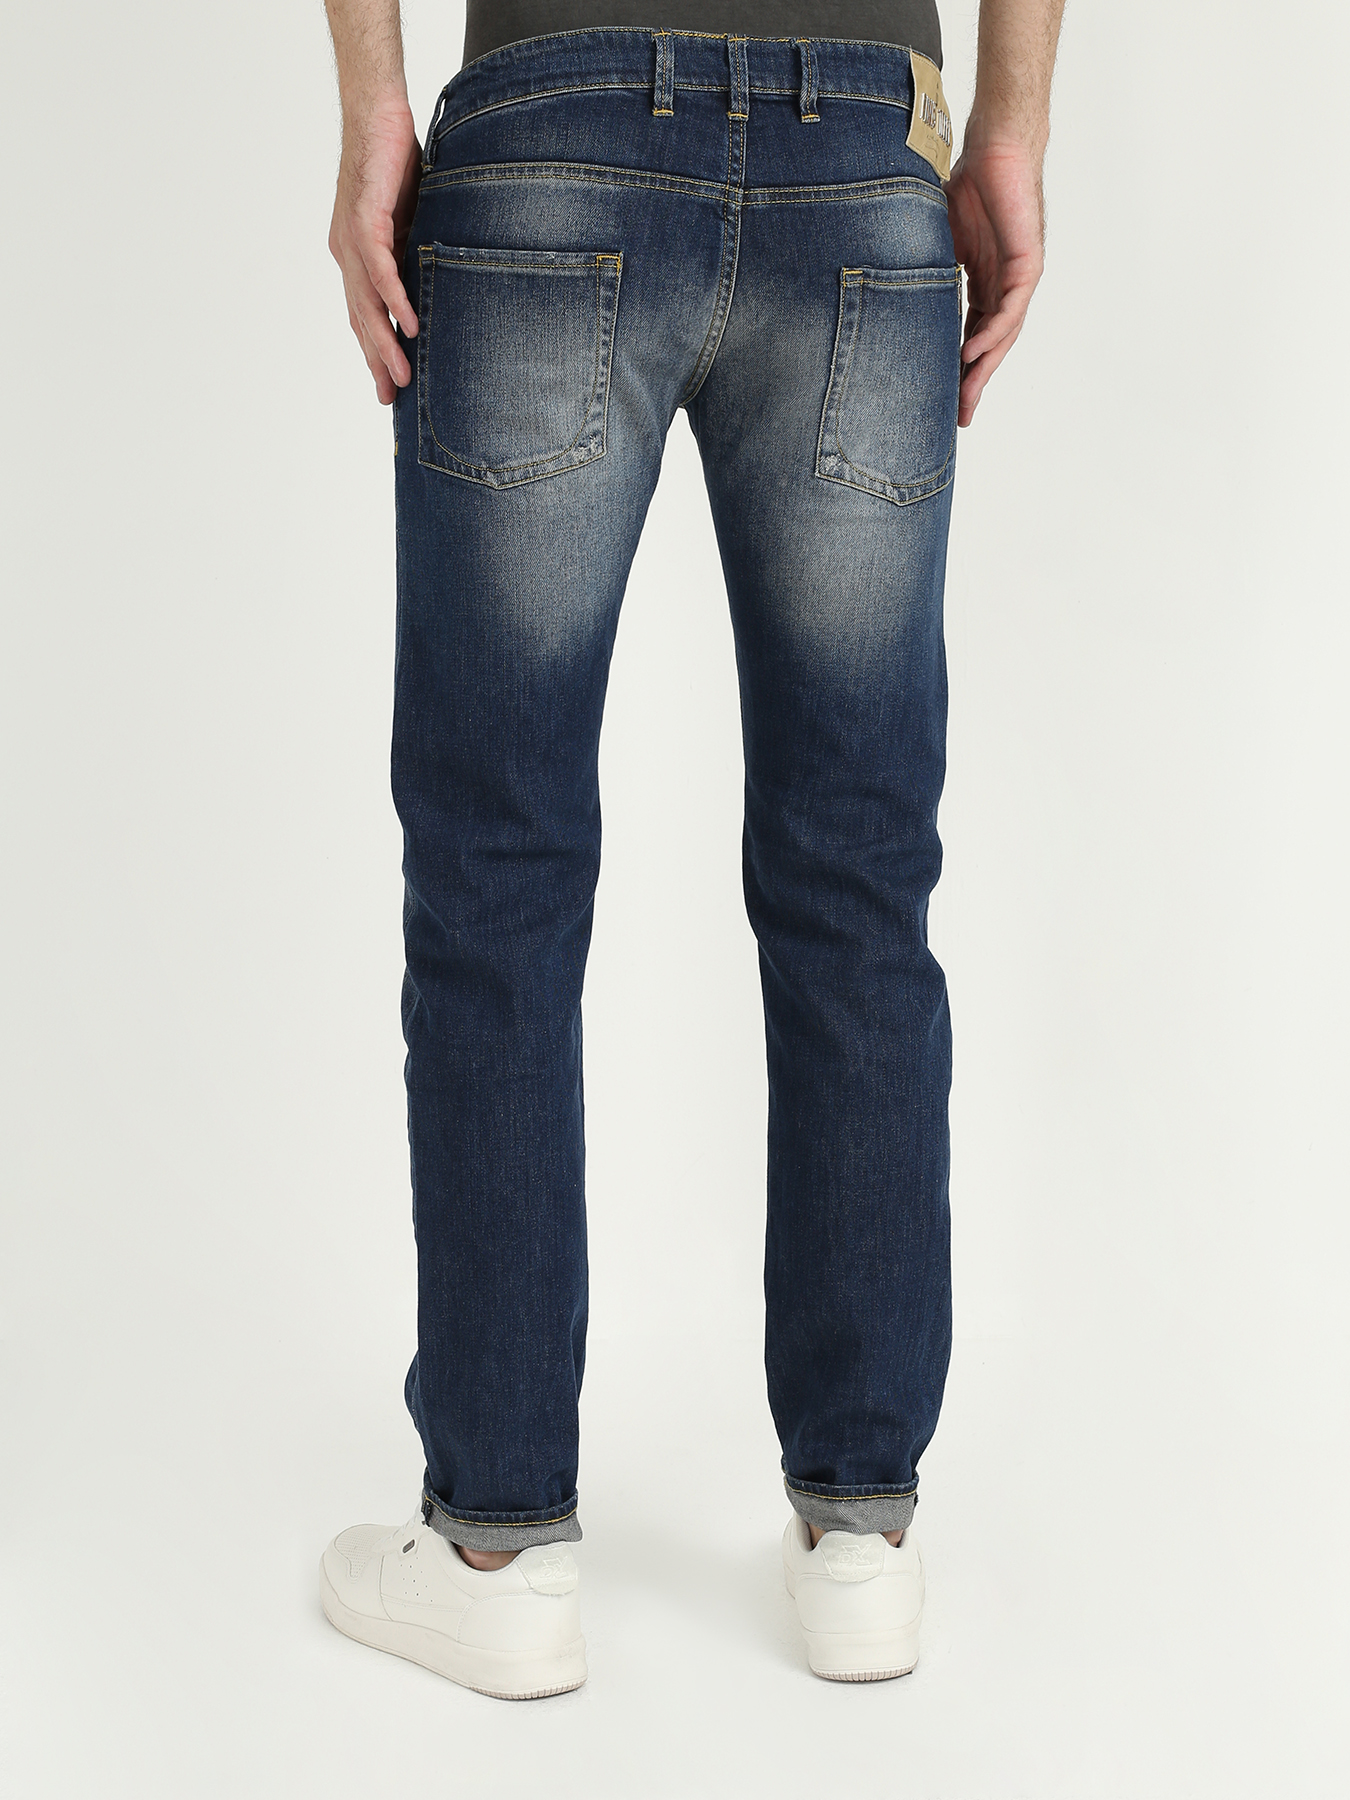 Finisterre Узкие мужские джинсы 322283-014 Фото 2